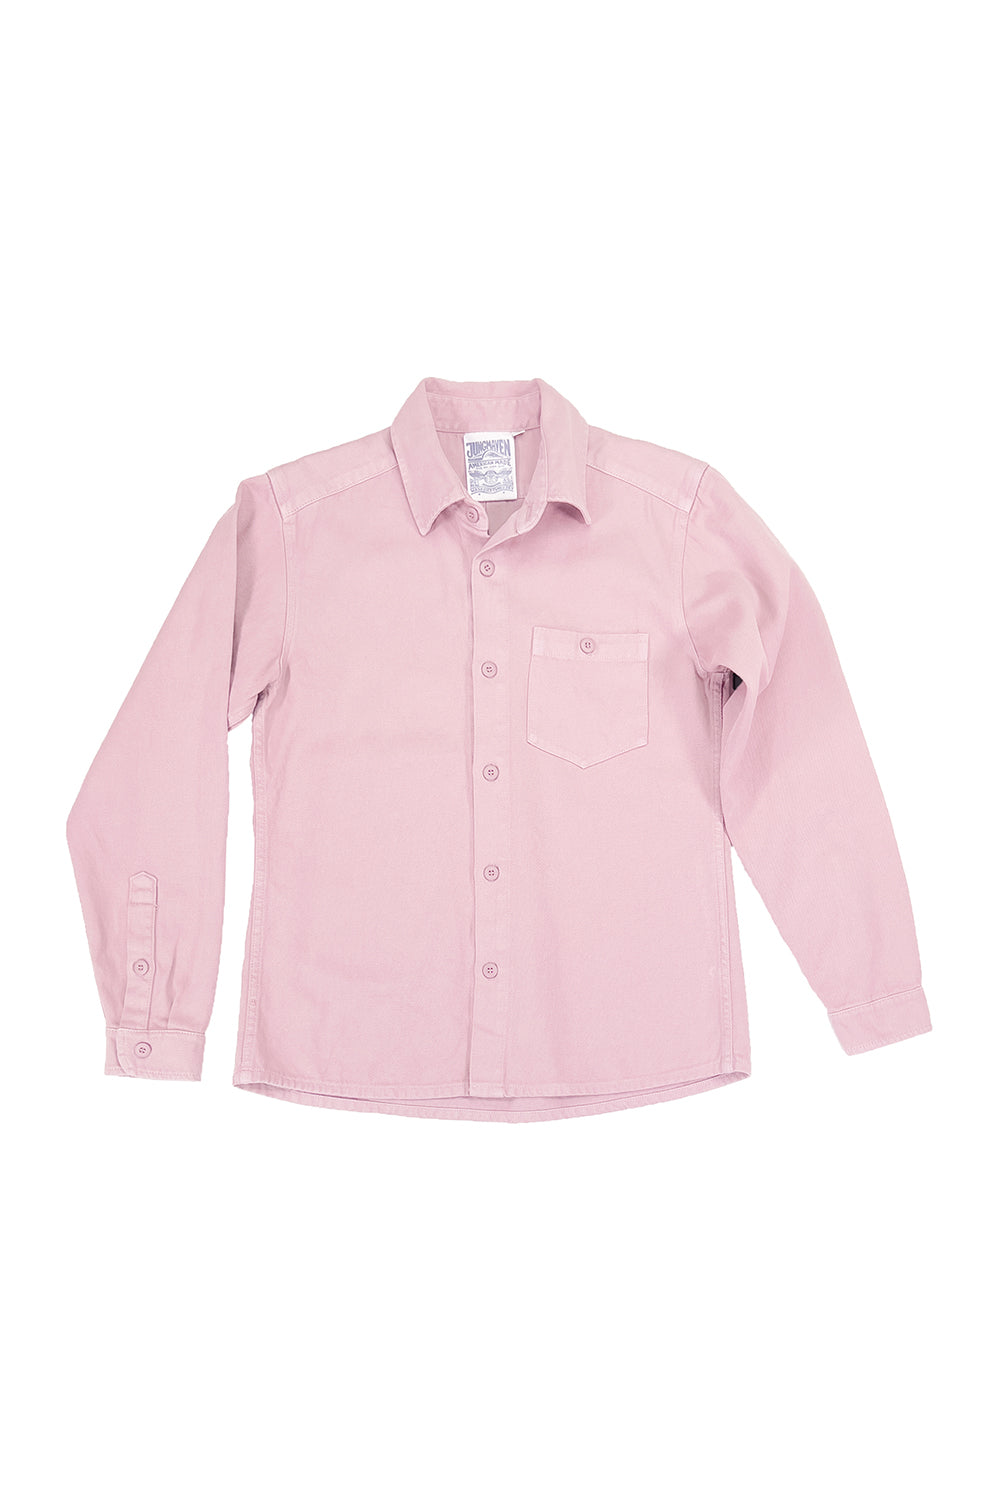 Topanga Shirt | Jungmaven Hemp Clothing & Accessories / Color: Rose Quartz